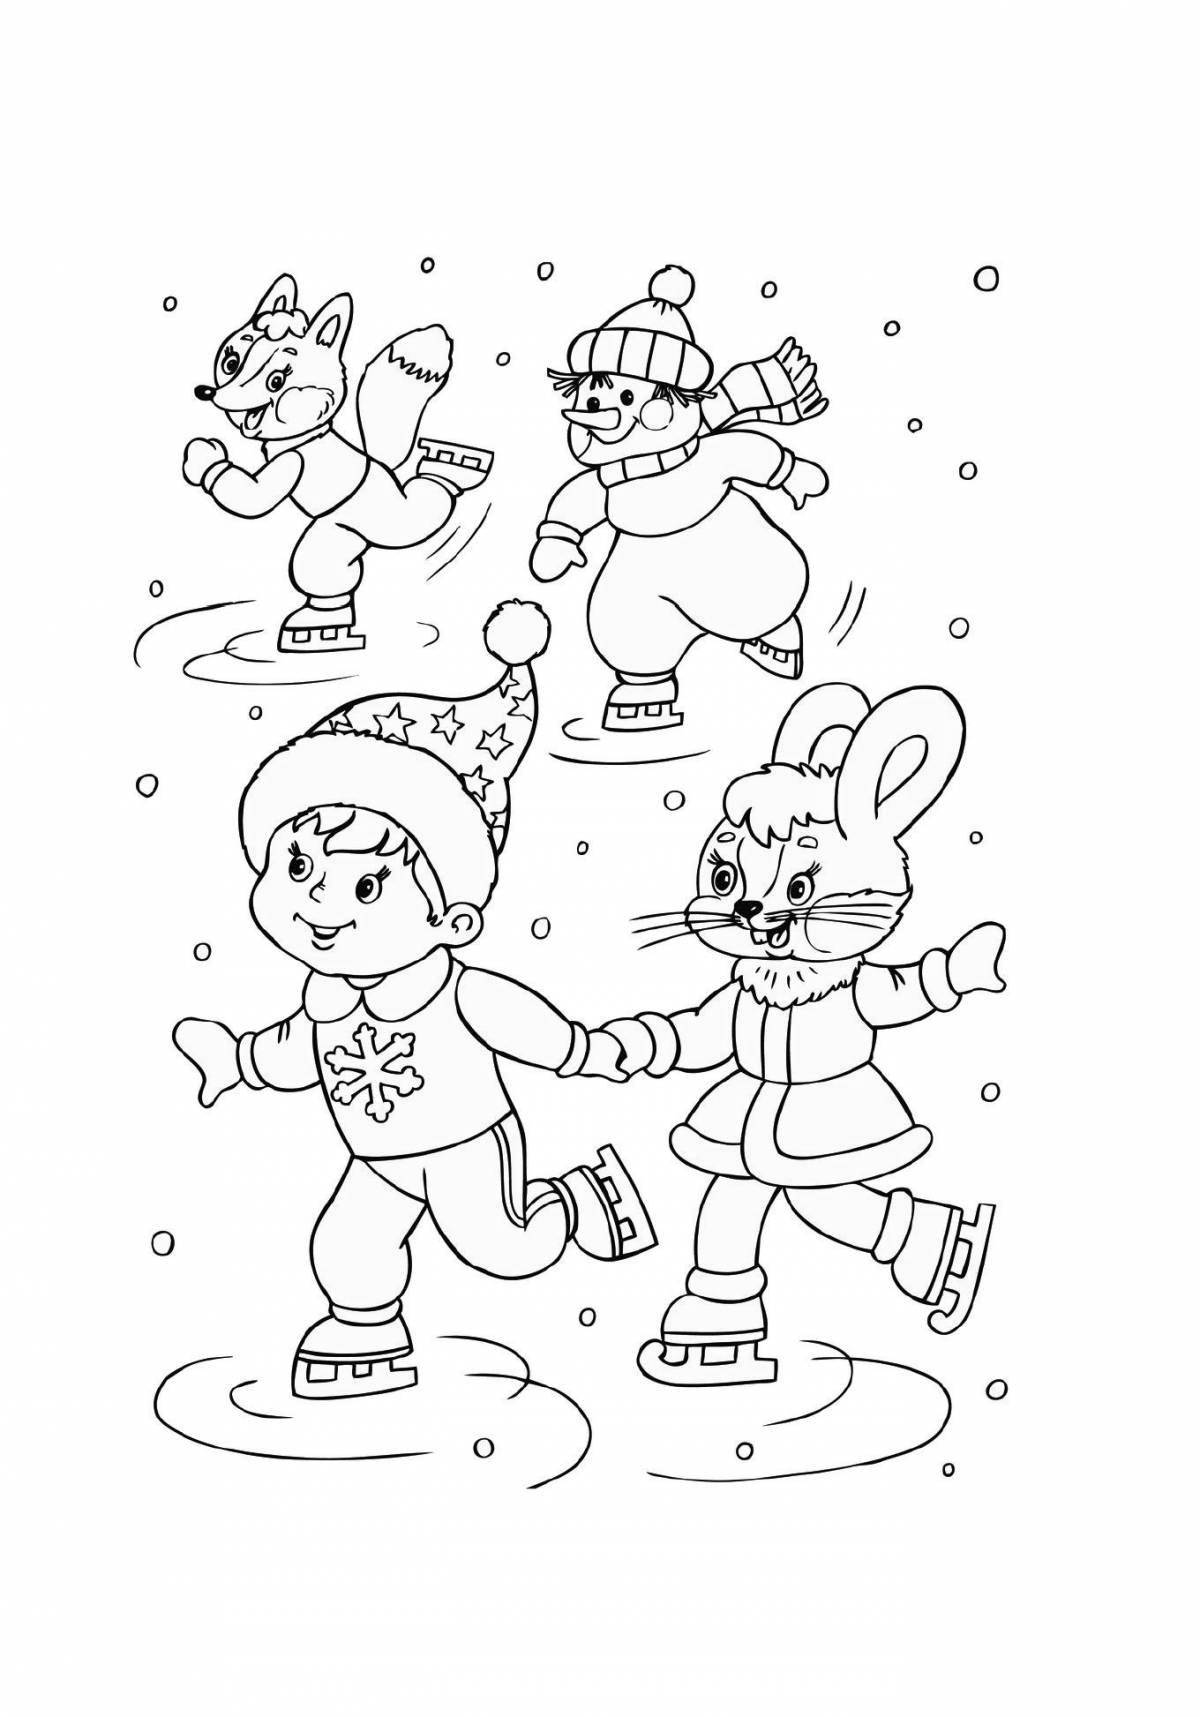 Splendorous coloring page winter fun senior group